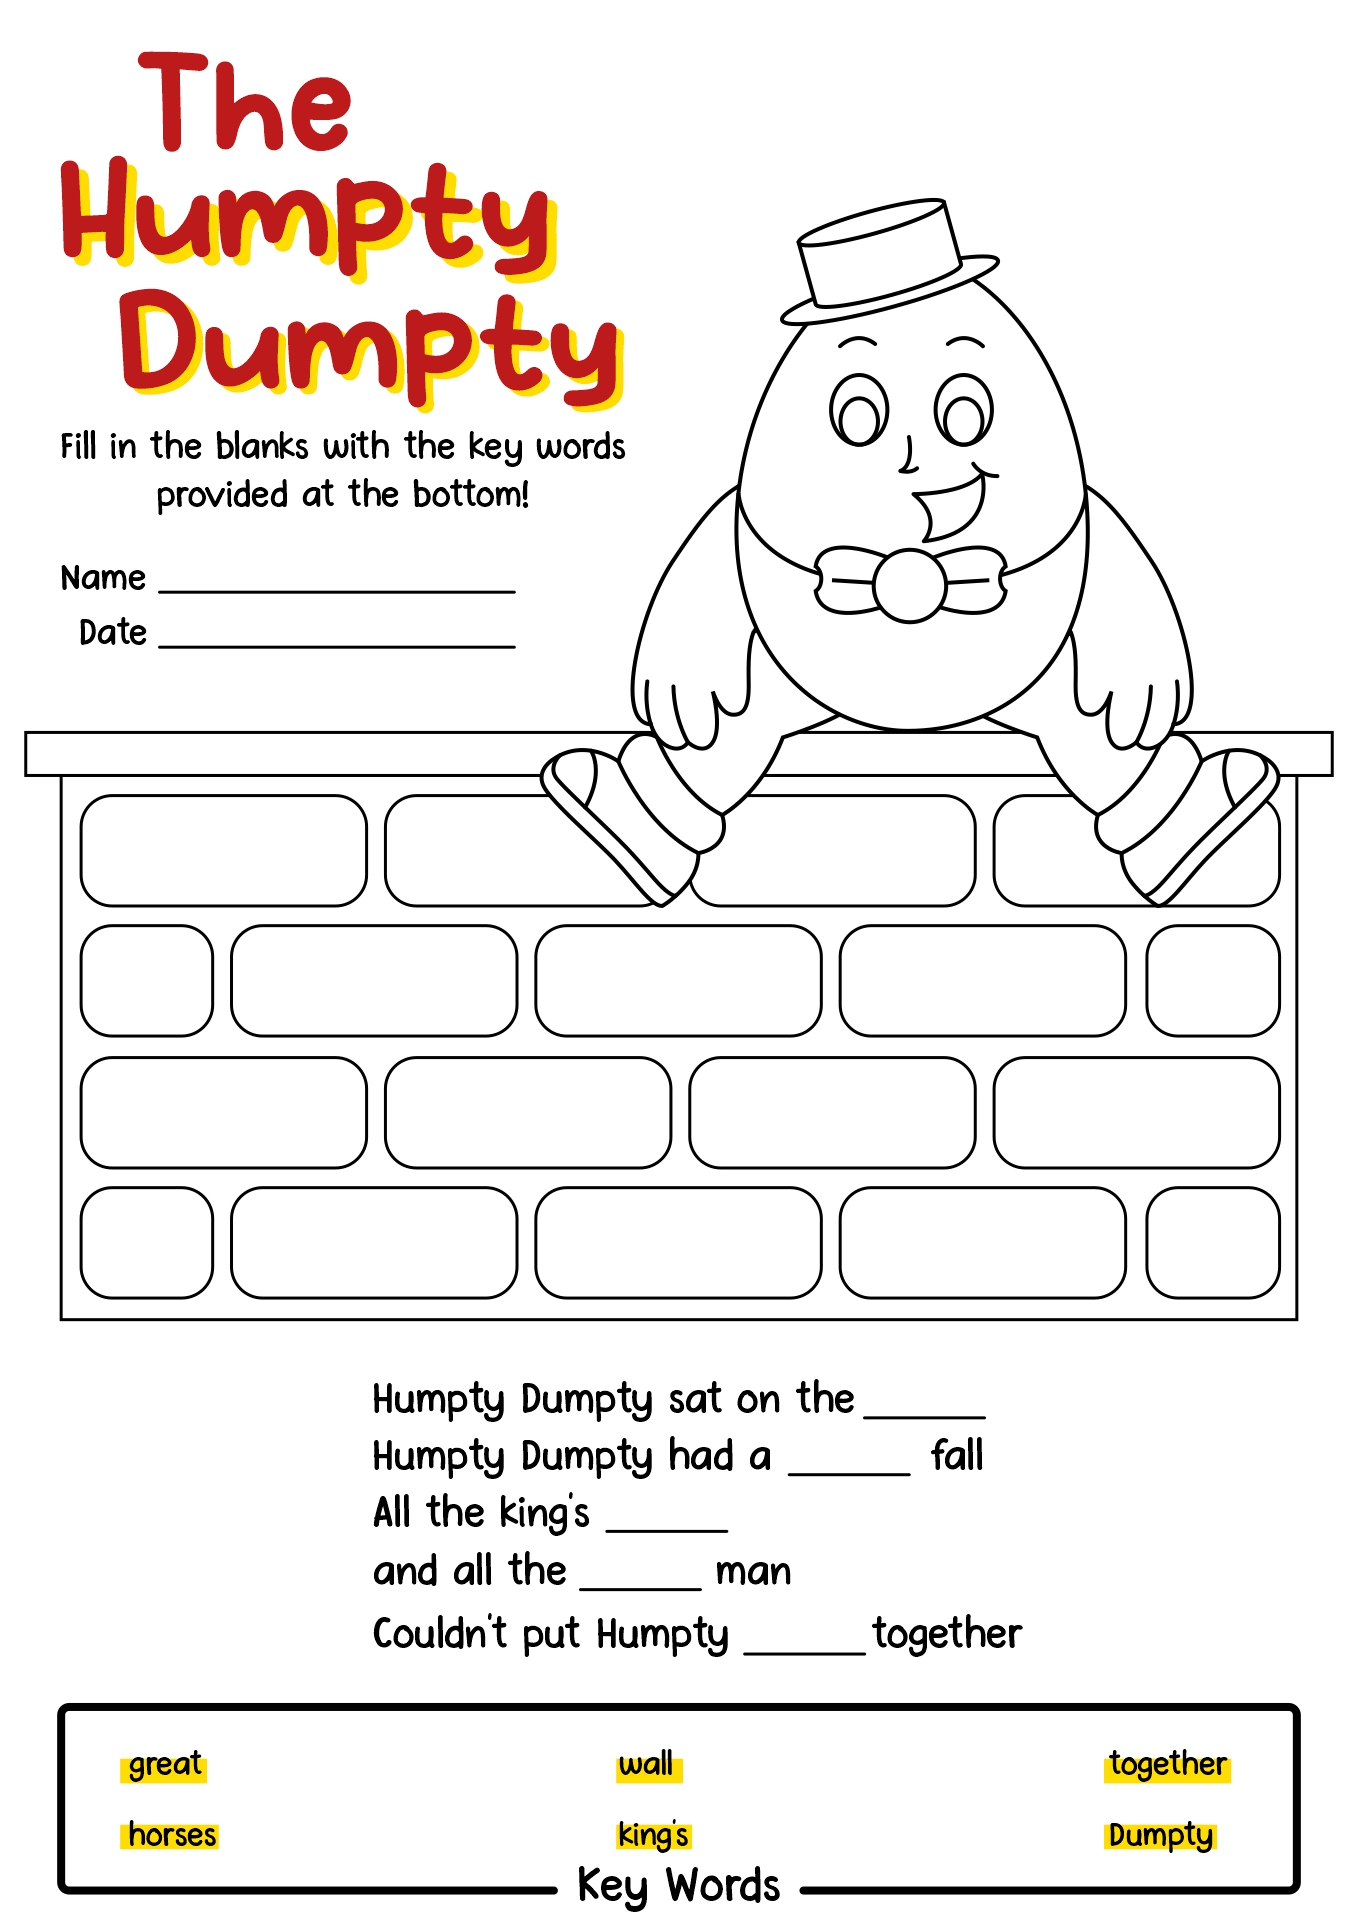 Humpty Dumpty Printable